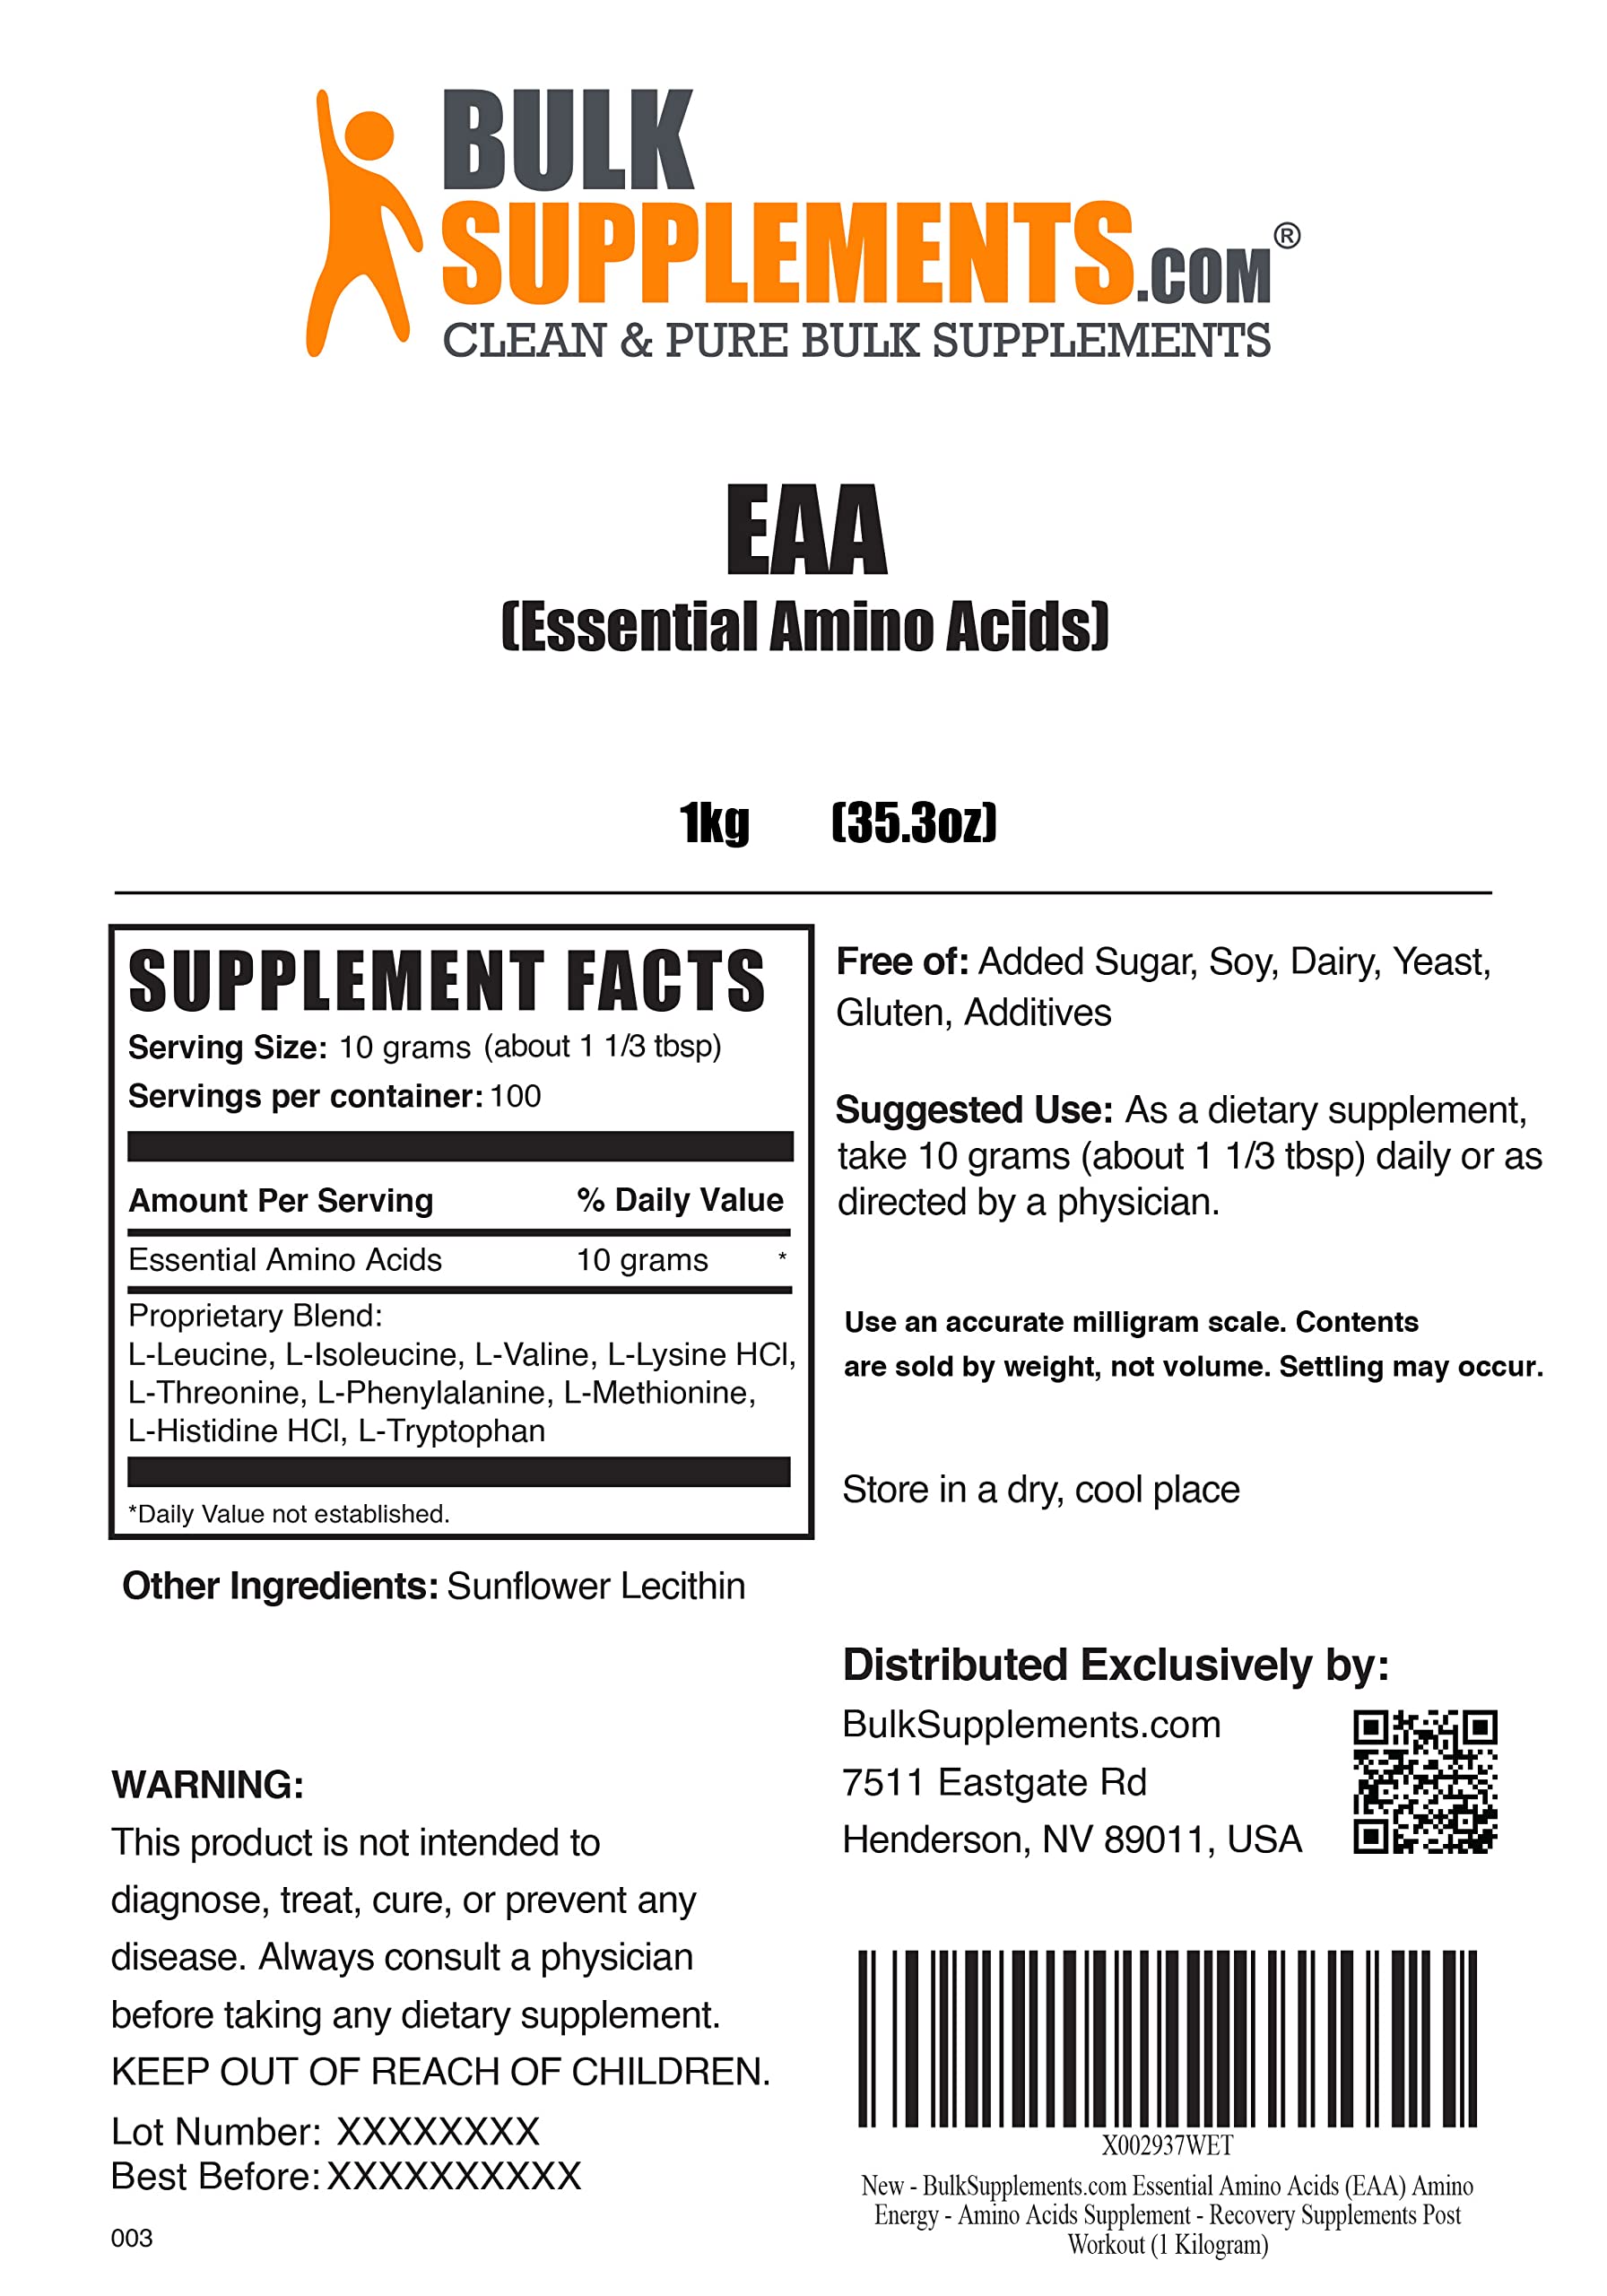 BULKSUPPLEMENTS.COM Essential Amino Acids Powder (EAA Powder) 1KG & Creatine Monohydrate Powder (Micronized Creatine) 1KG Bundle